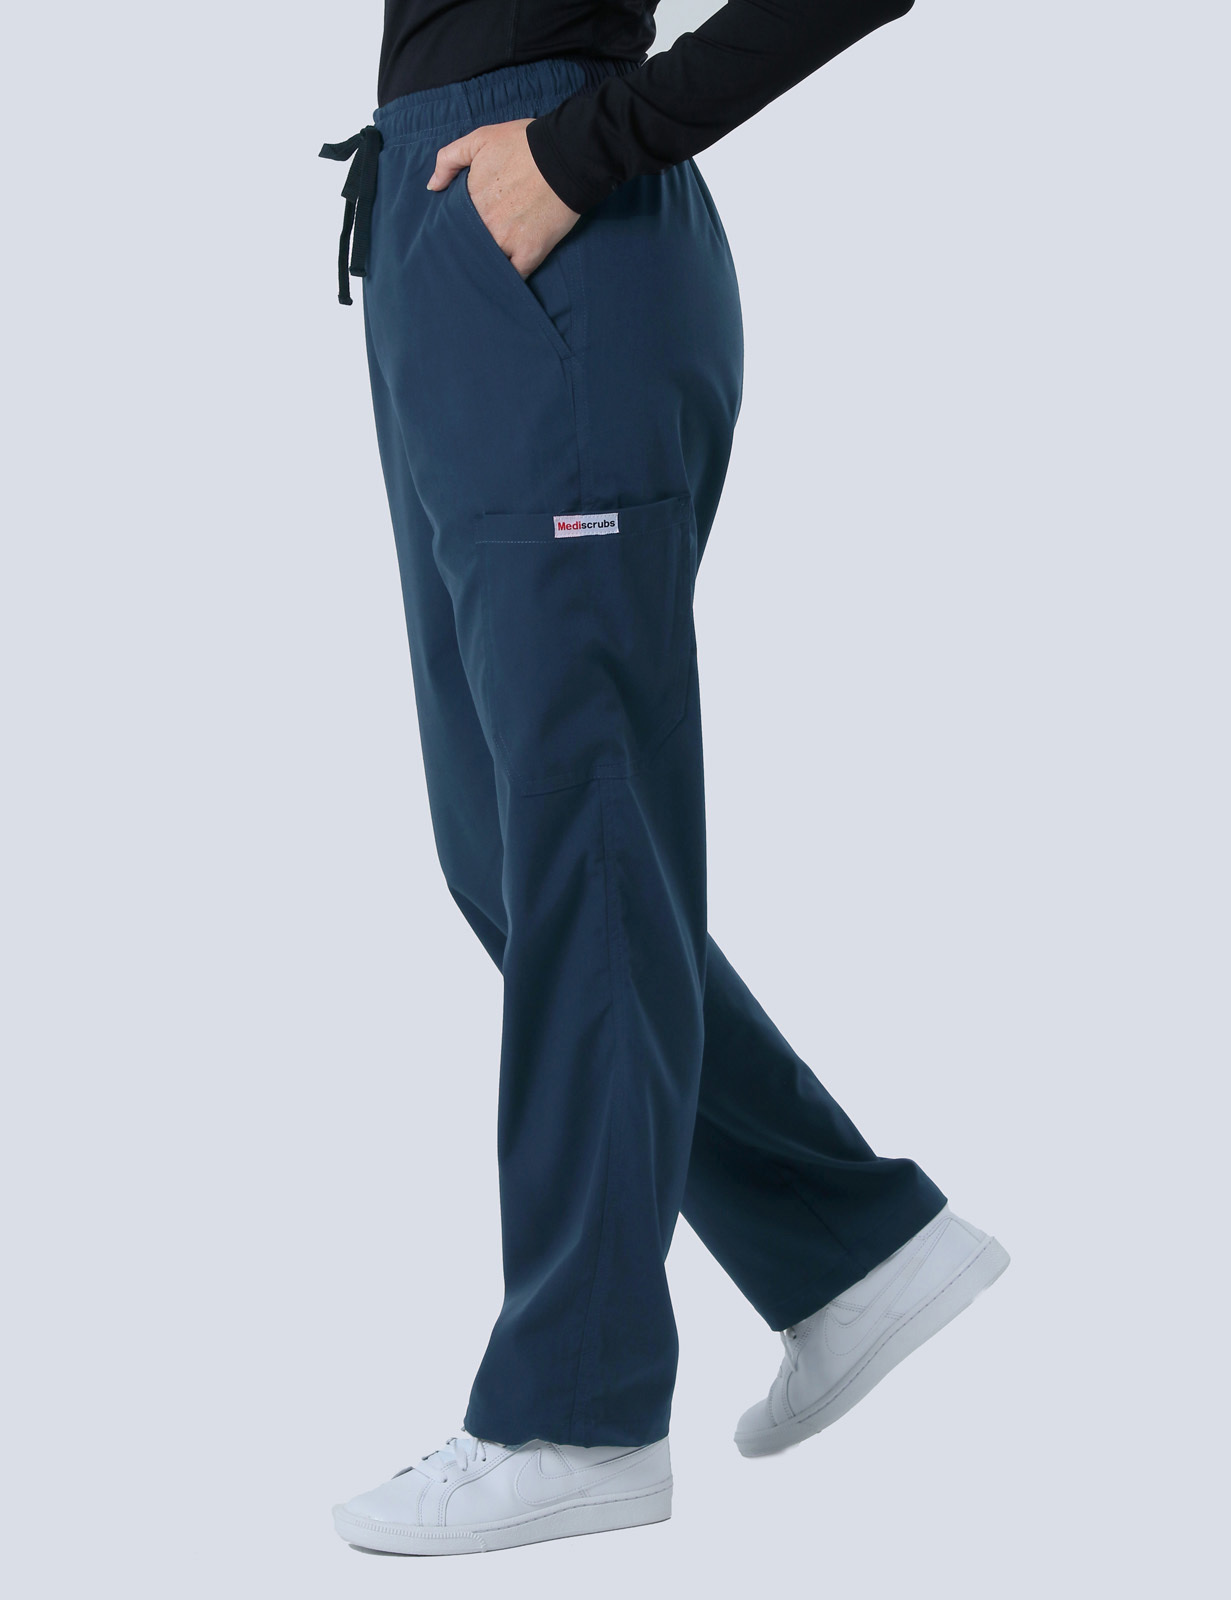 Regional Queensland Assistant in Nursing Uniform Set Bundle (Women's Fit Solid Top and Cargo Pants in Navy incl Logos)